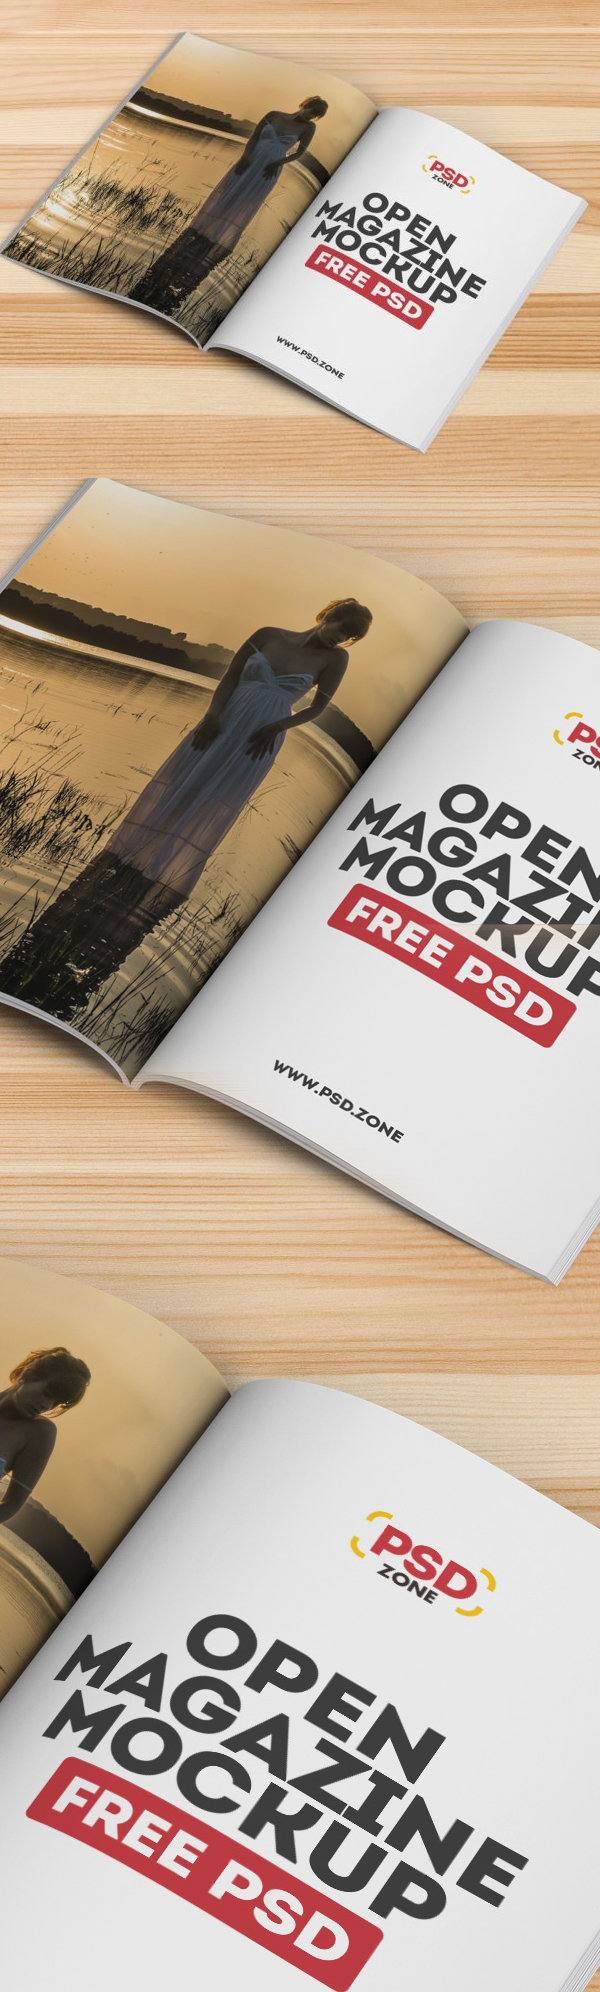 Open Magazine Mockup Free PSD